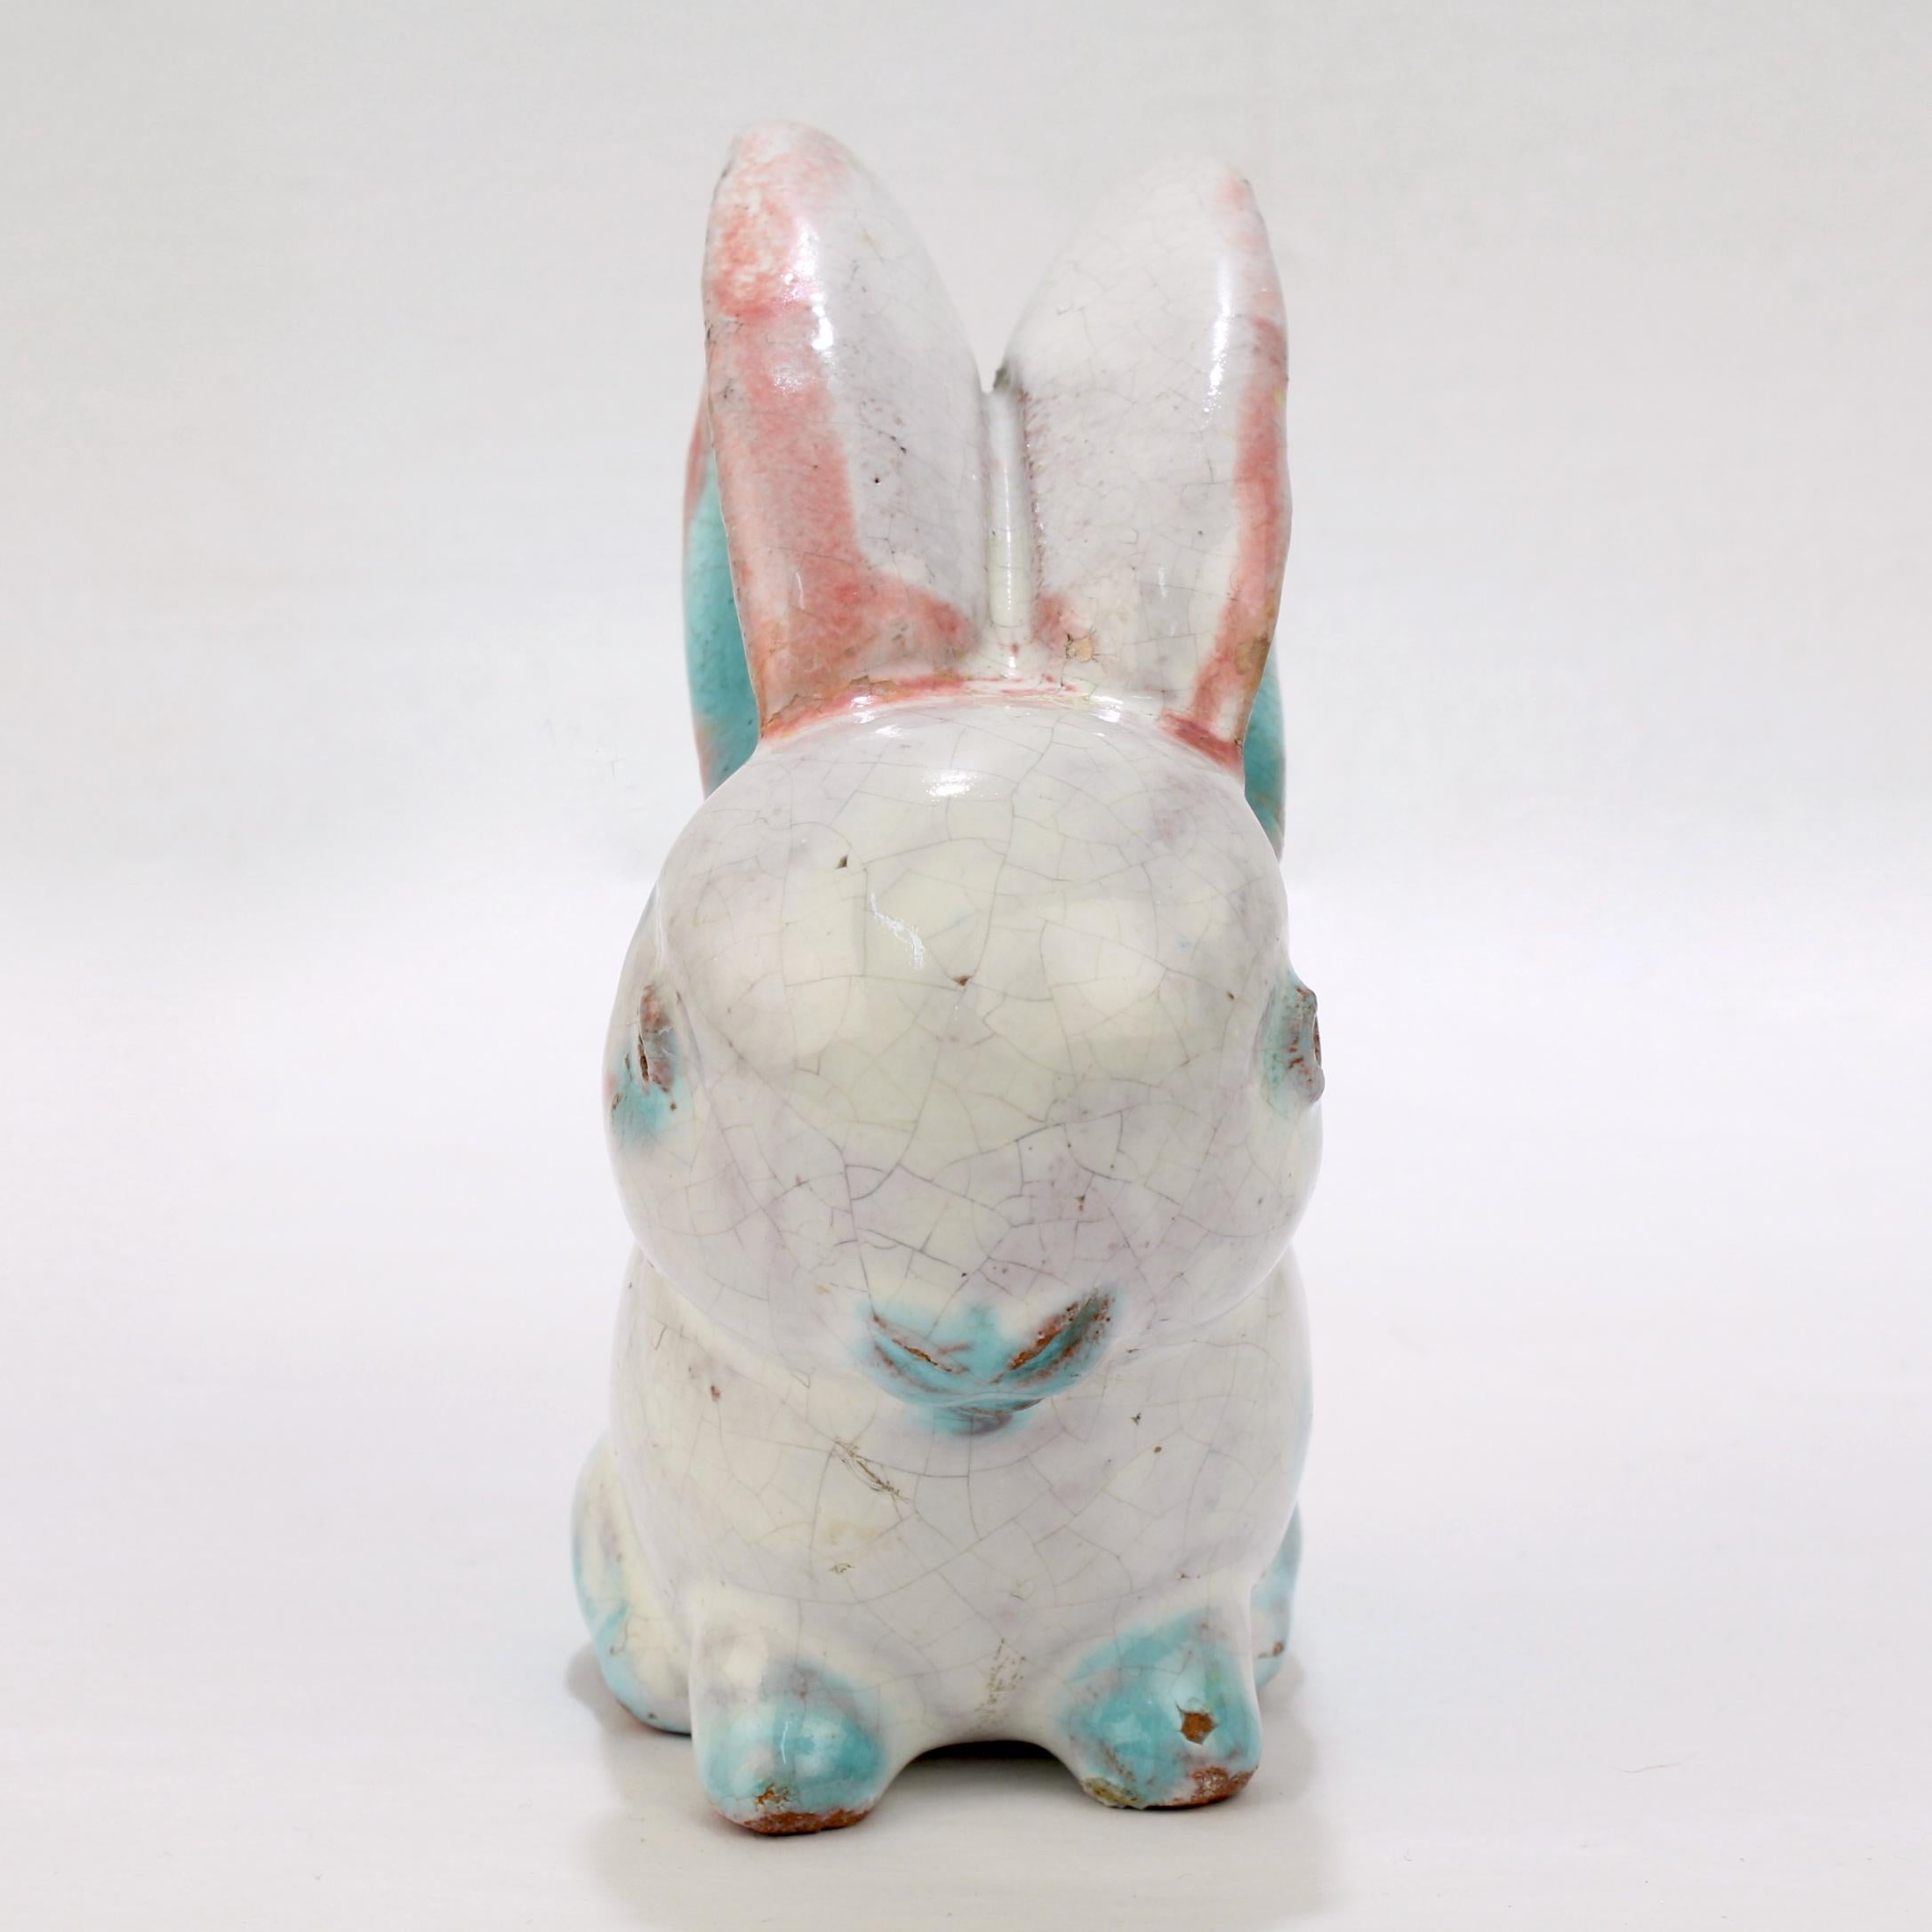 Glazed Antique Austrian Terracotta Pottery Rabbit Figurine by Walter Bosse for Kufstein